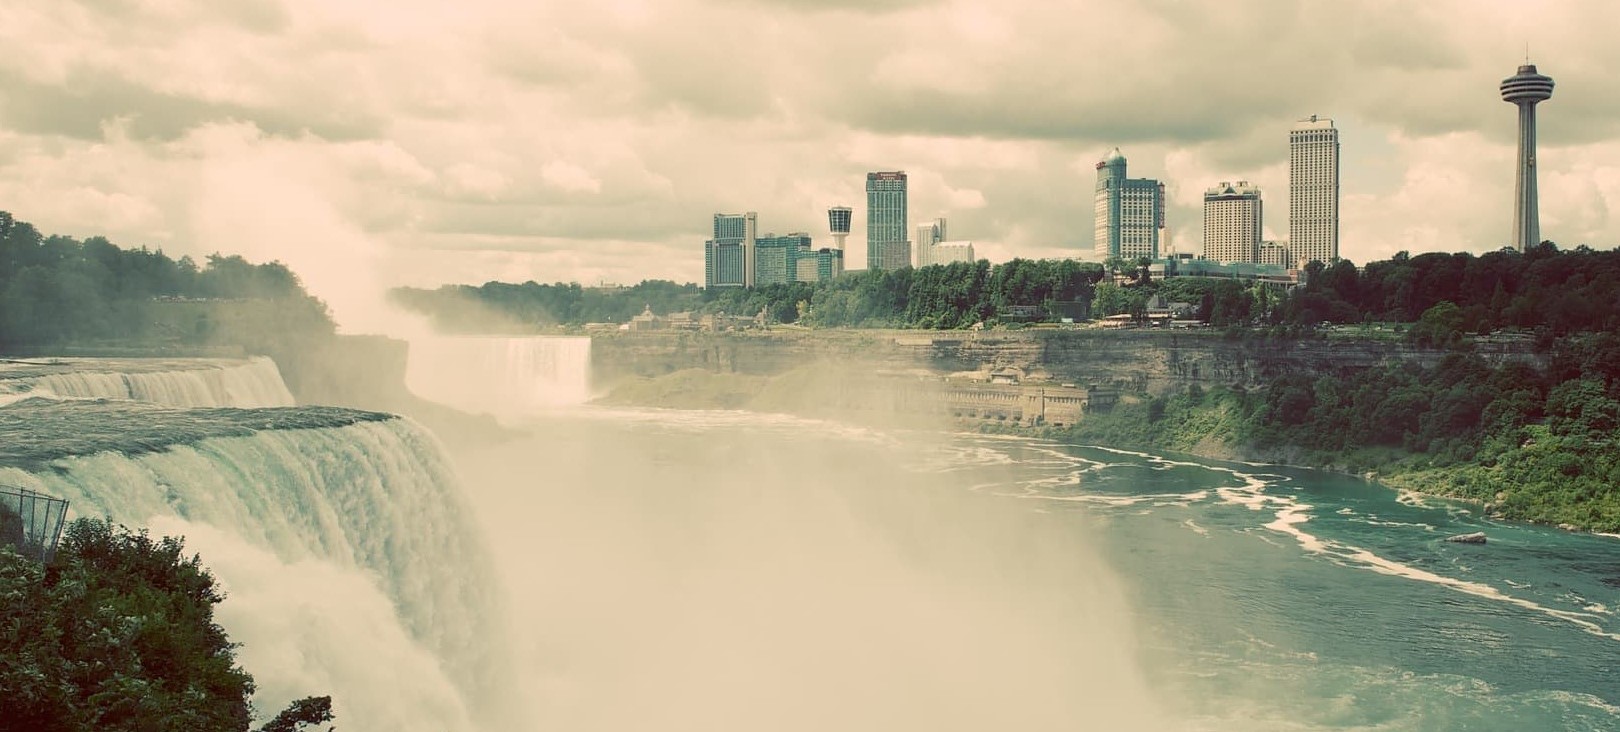 Niagara Falls, the largest waterfall in the US